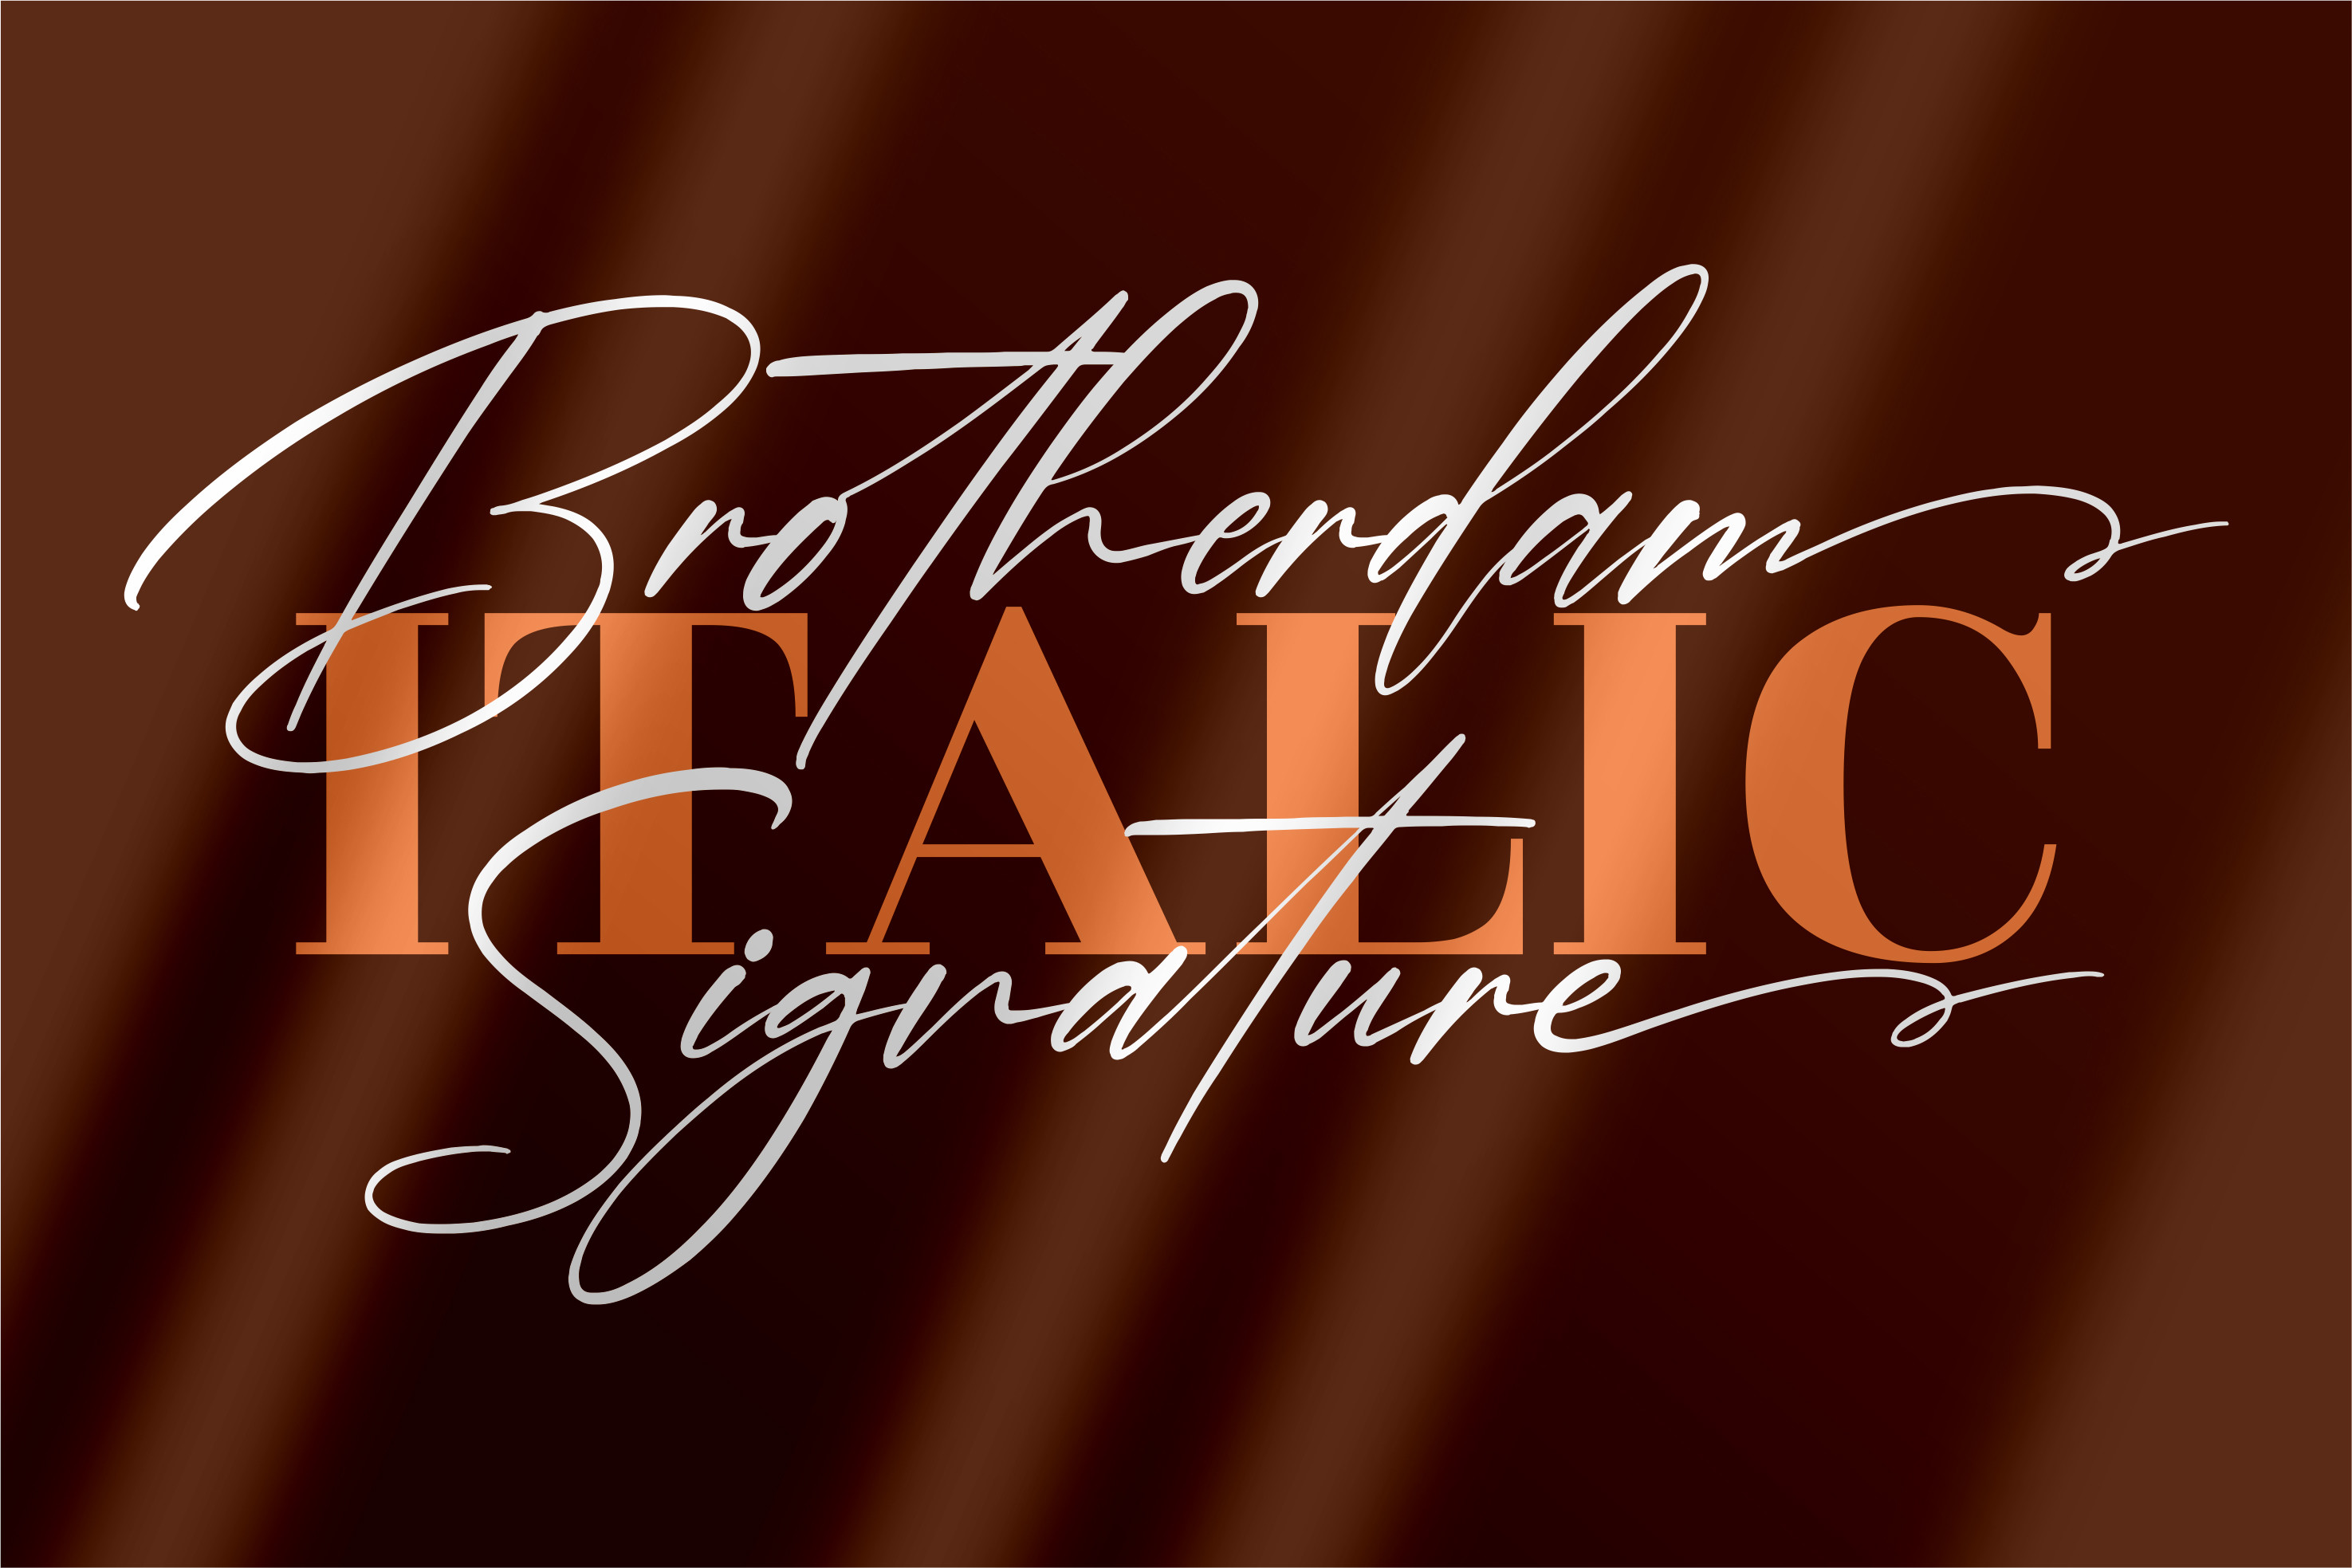 Brotherdam Signature